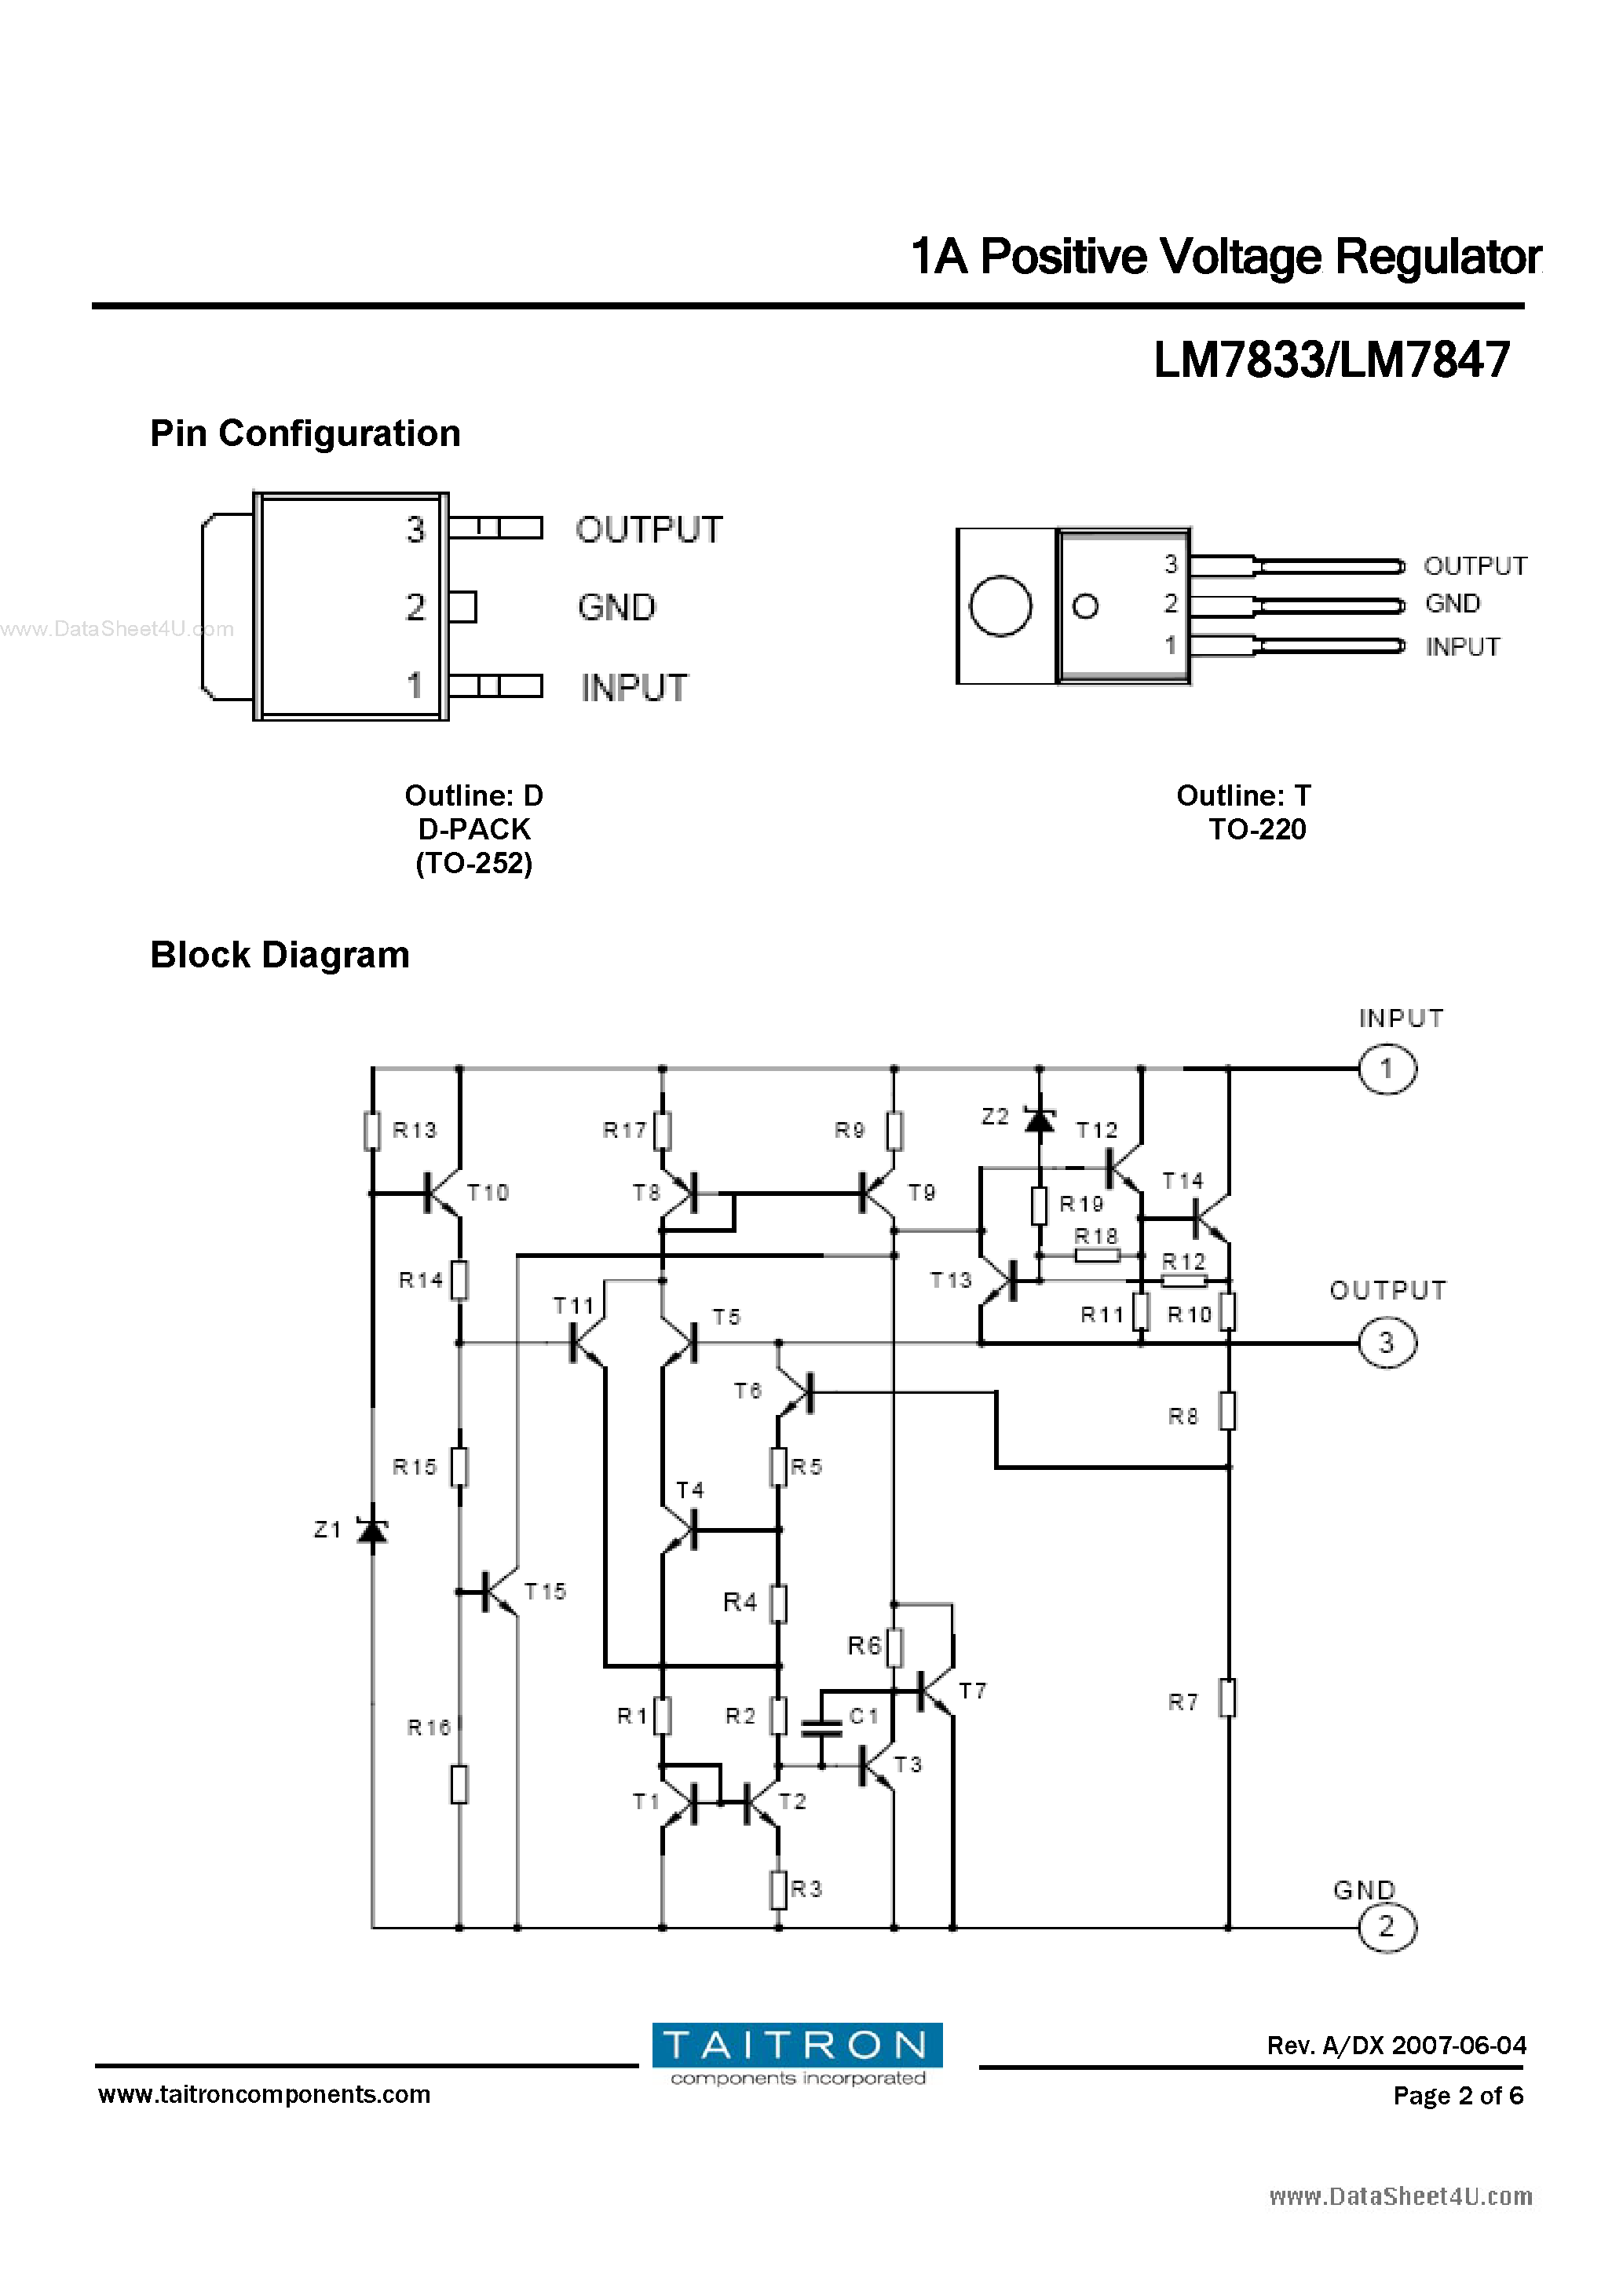 Даташит LM7833 - (LM7833 / LM7847) 1A Positive Voltage Regulator страница 2